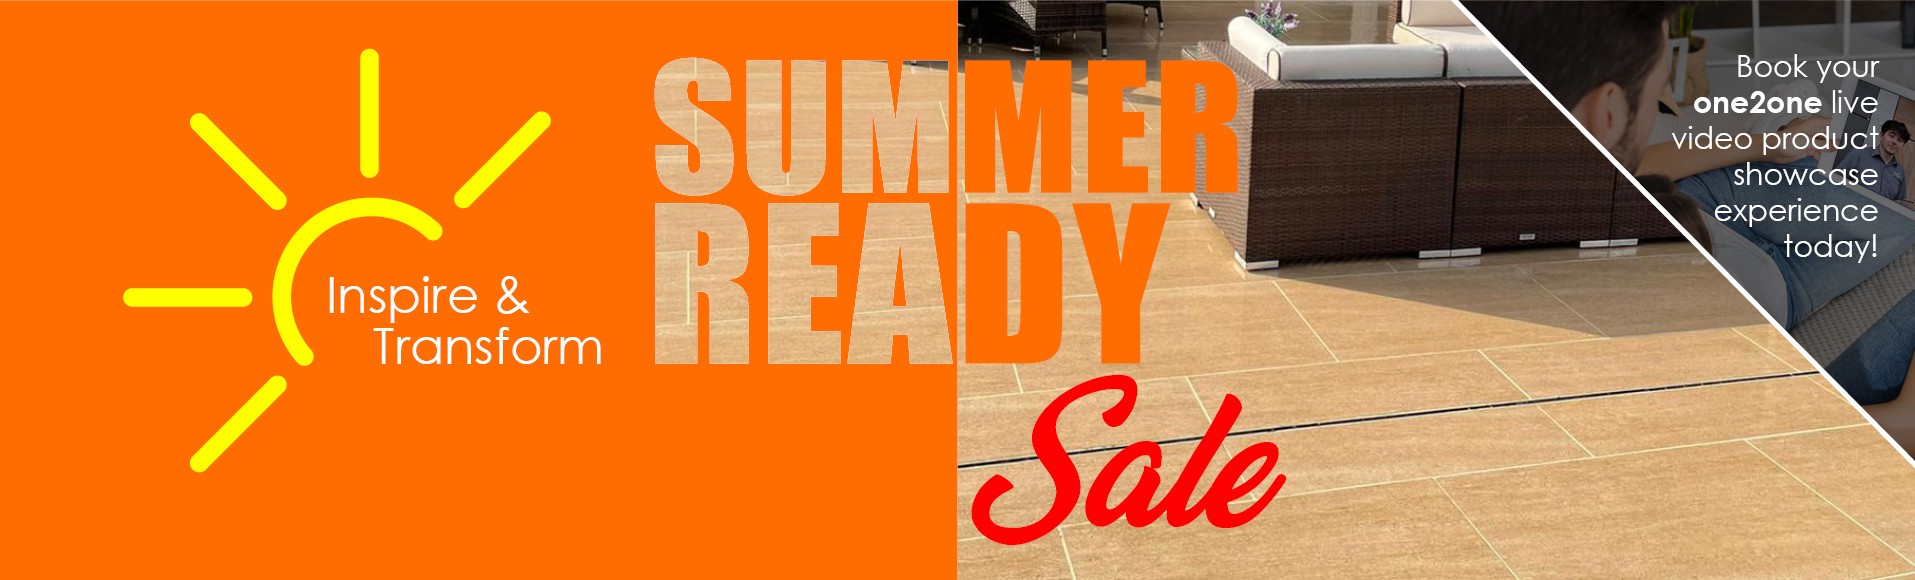 Summer Ready Sale